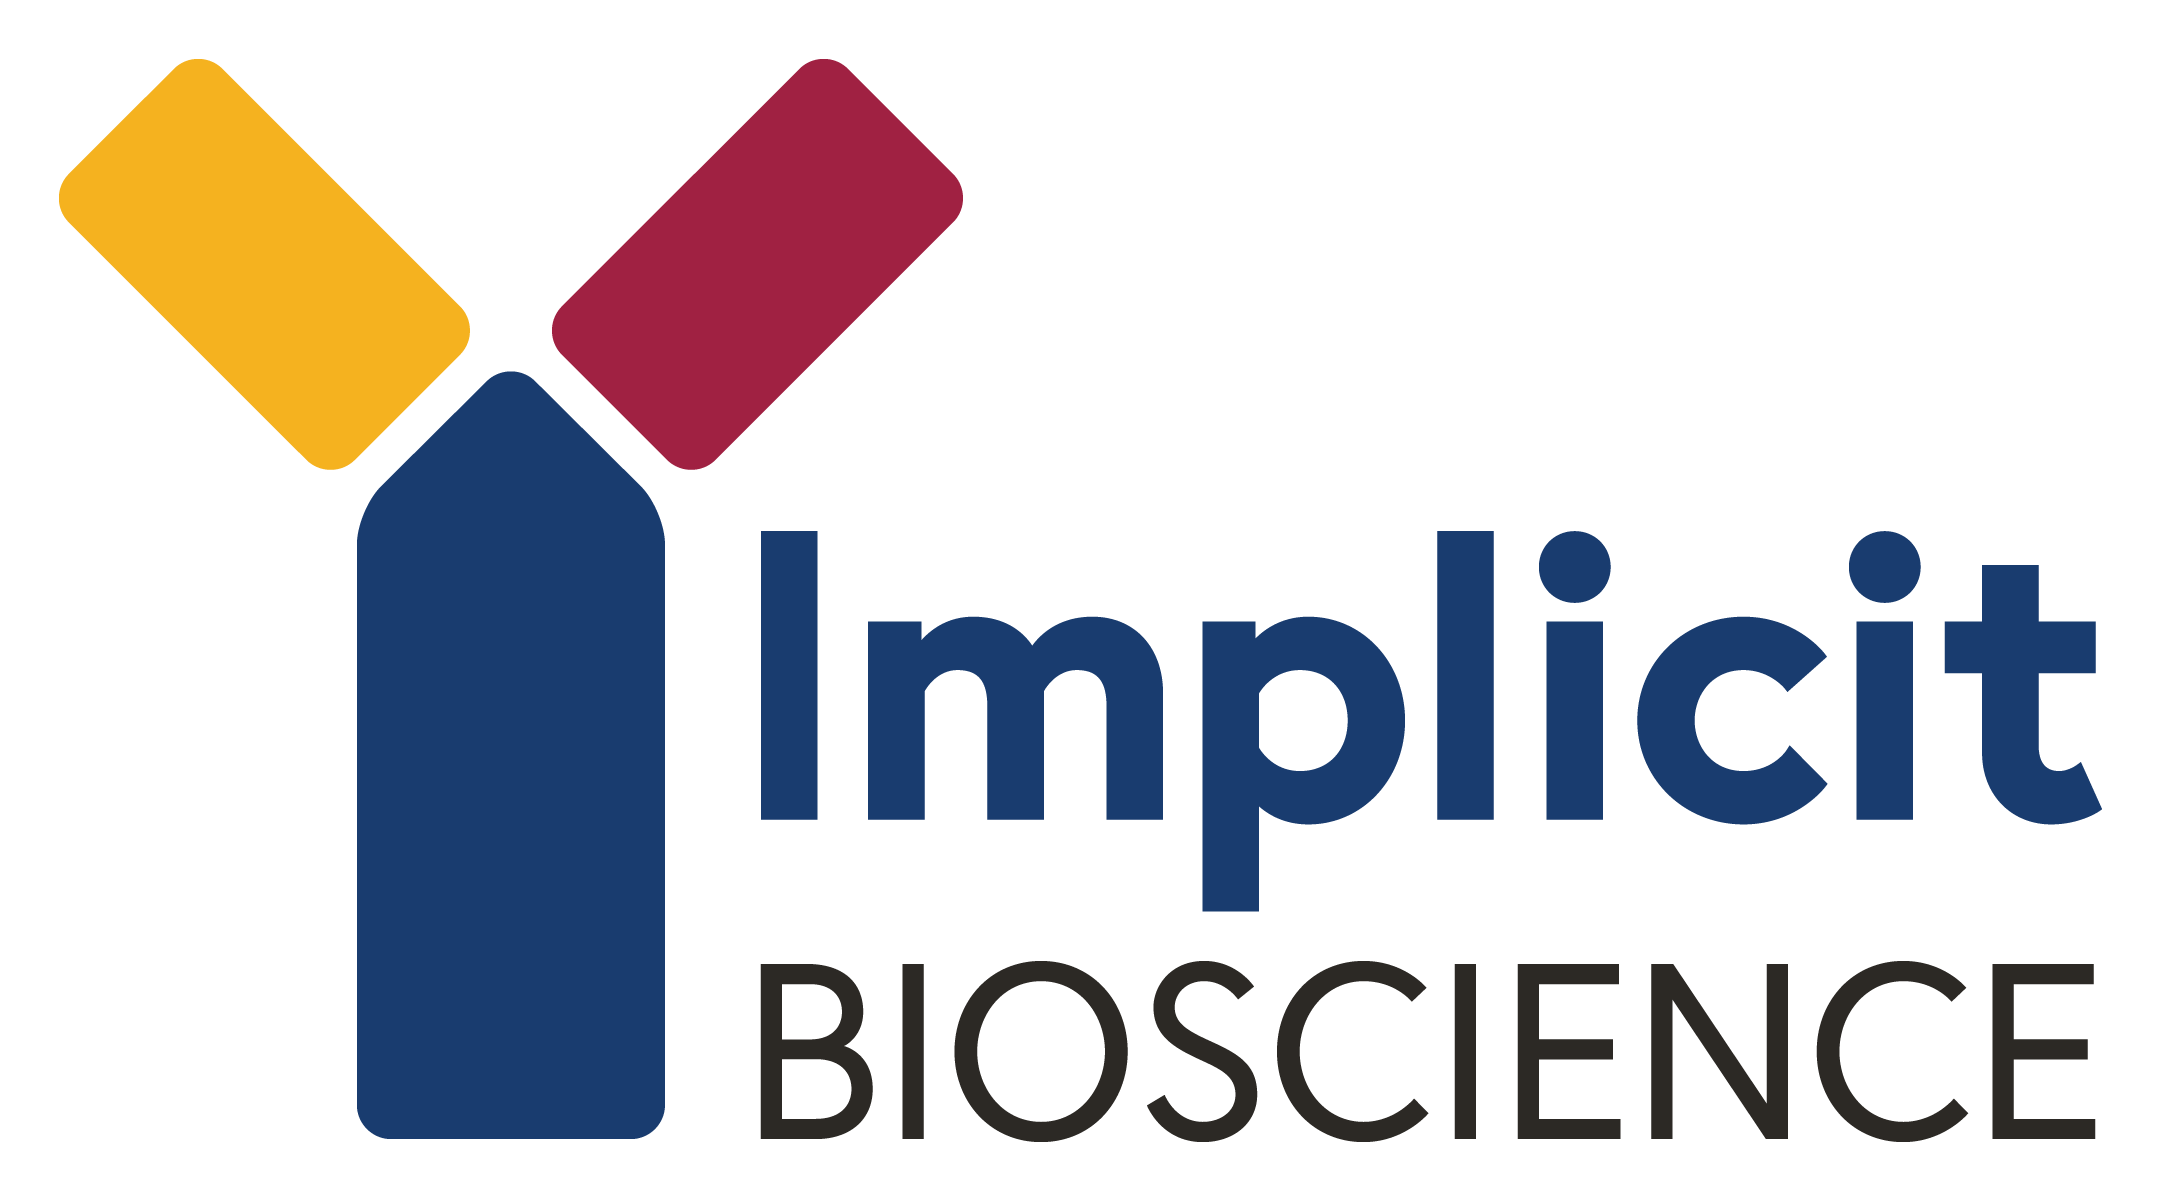 Implicit Bioscience